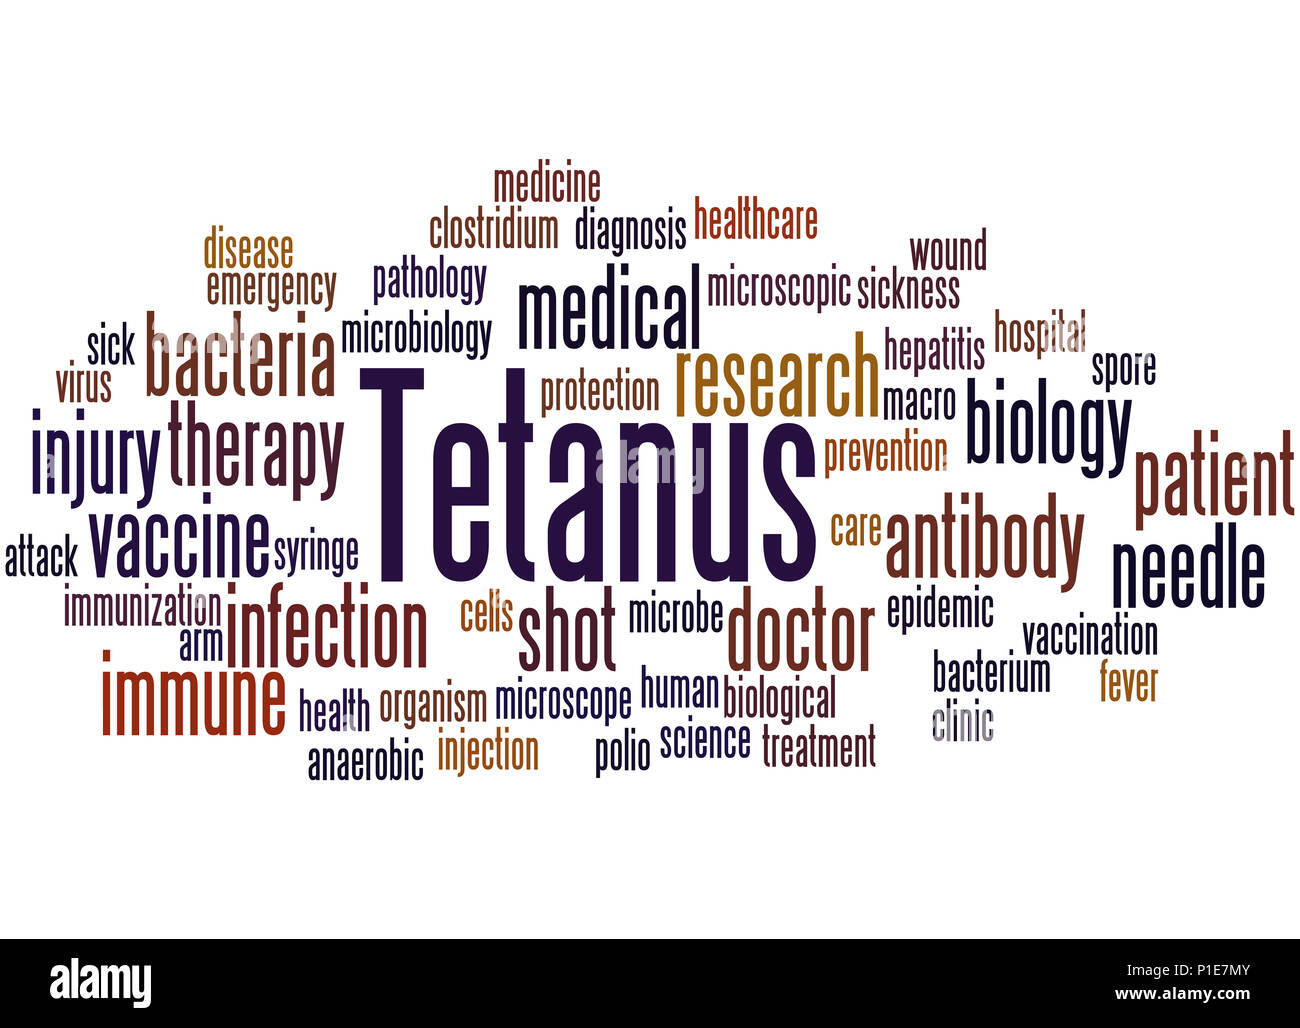 Tetanus, word cloud concept on white background. Stock Photo